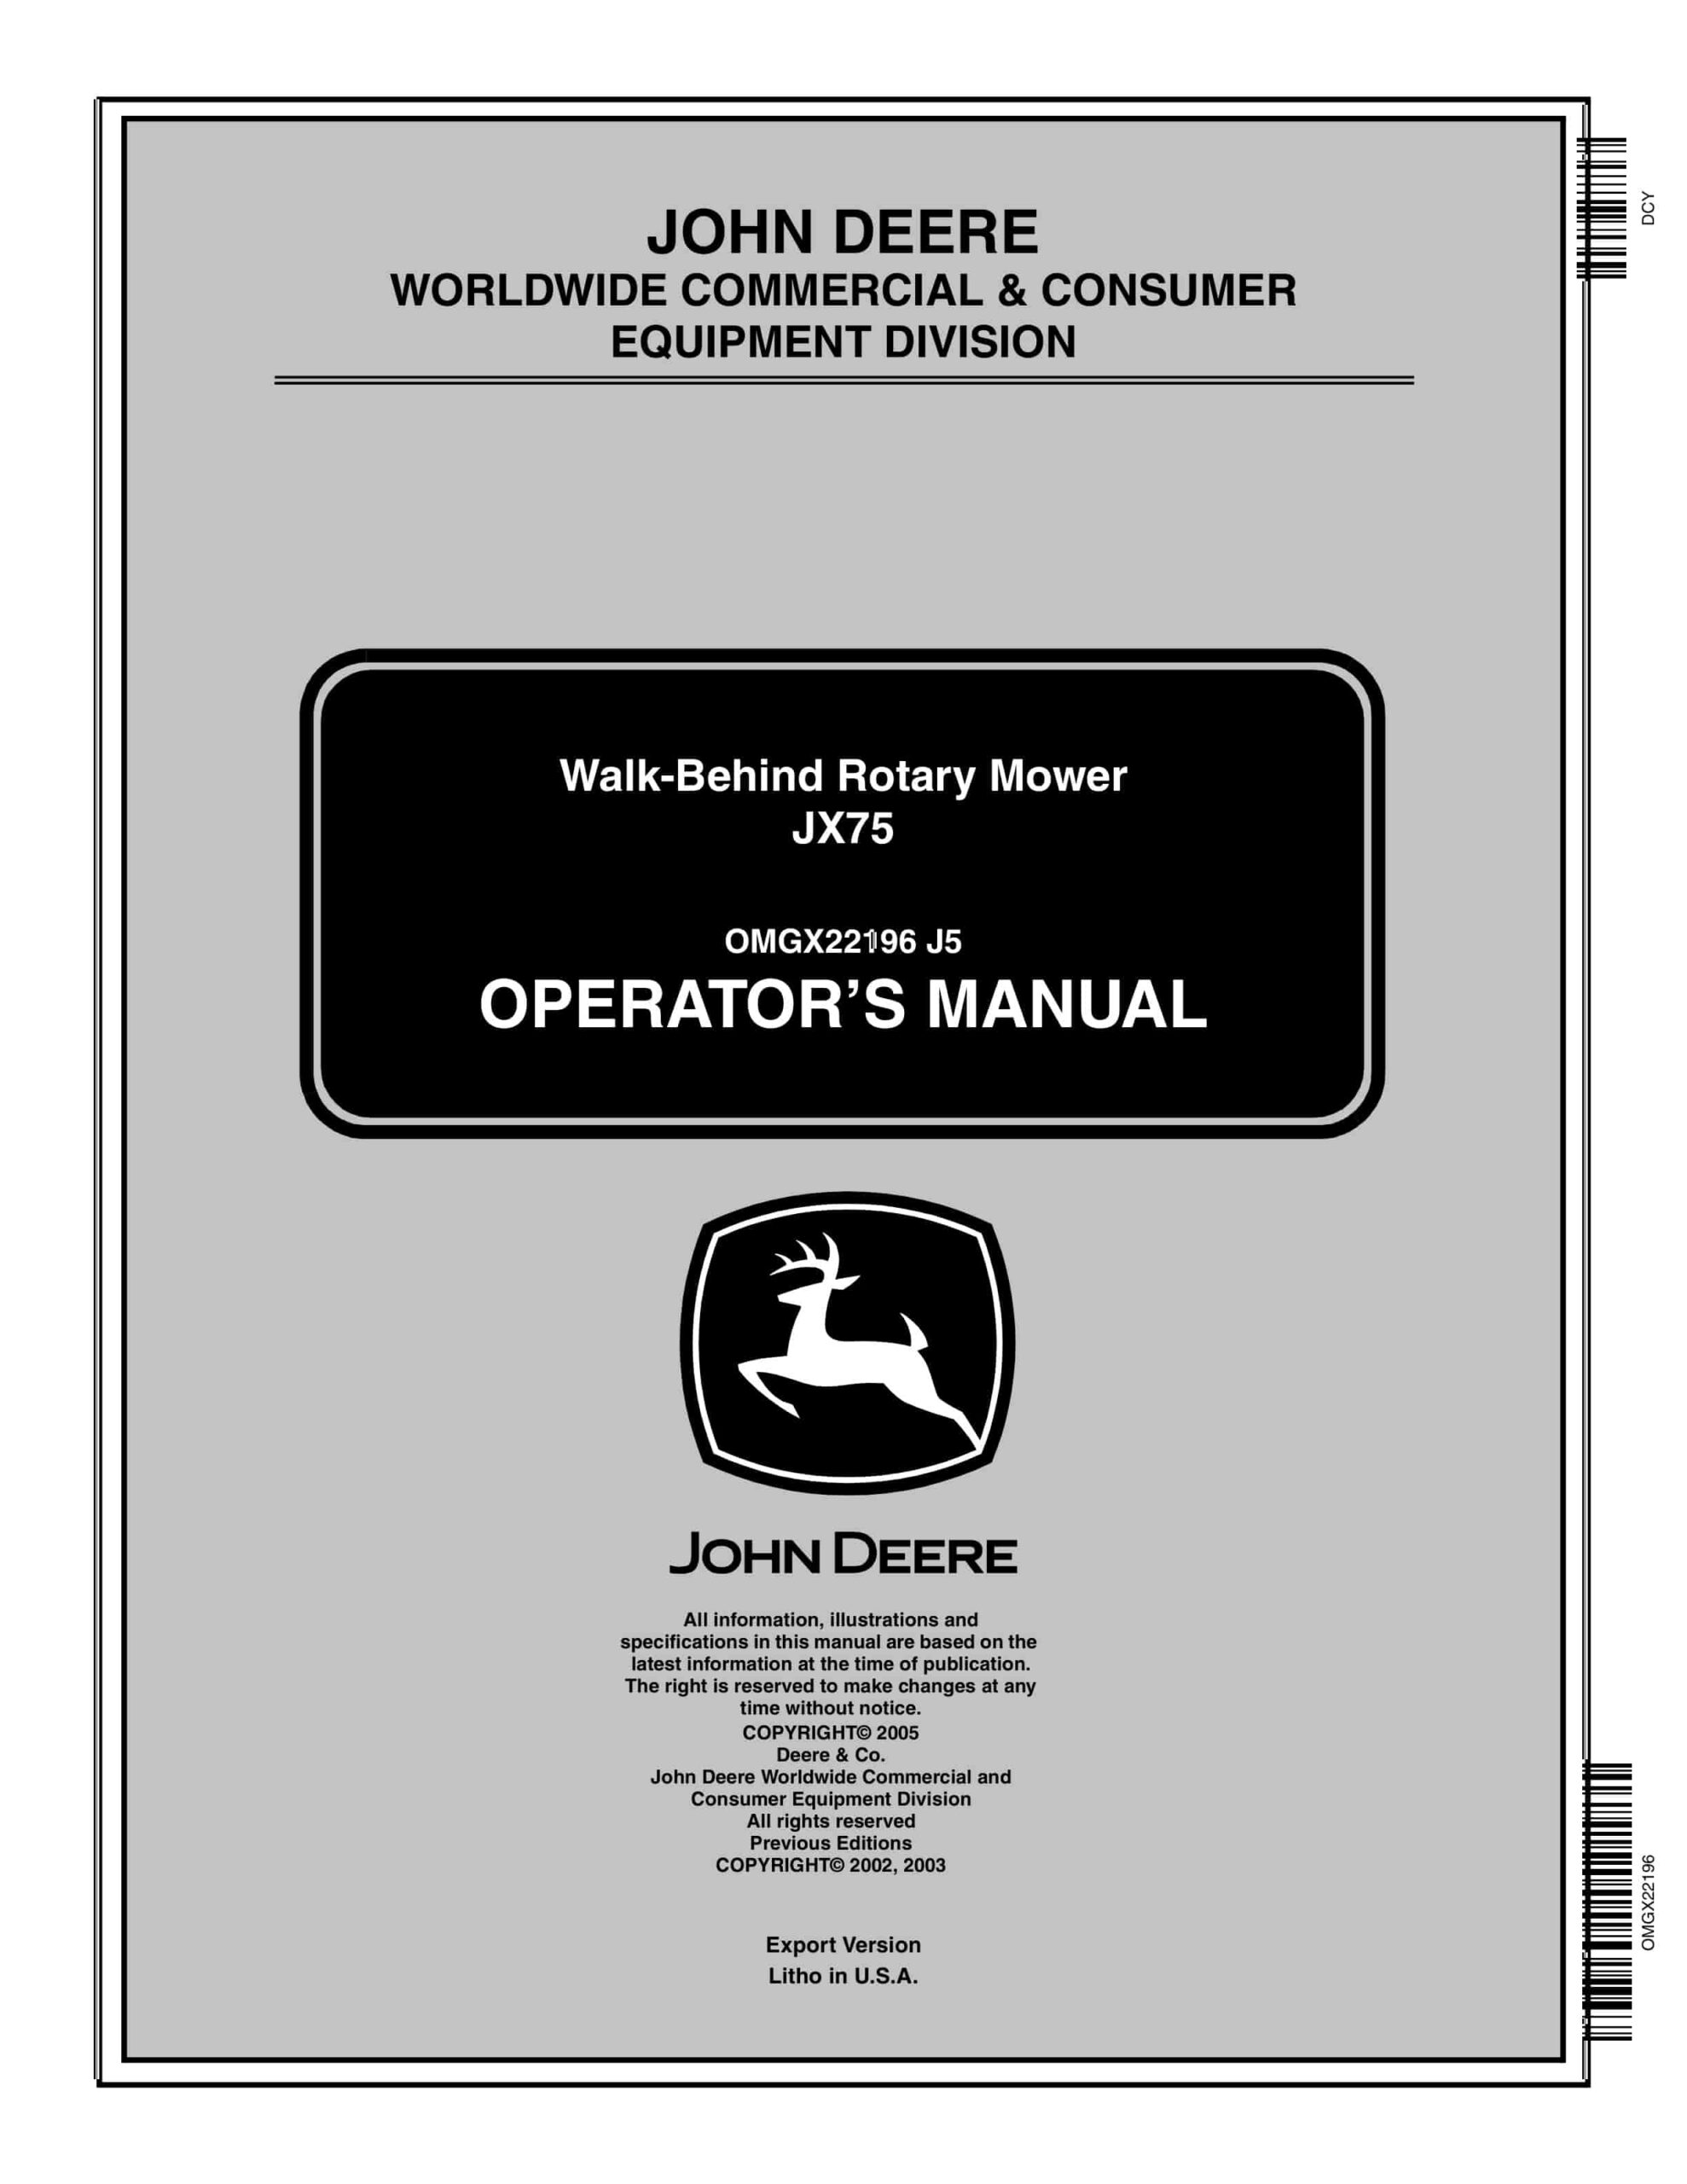 John Deere JX75 Walk-Behind Rotary Mowers Operator Manual OMGX22196-1